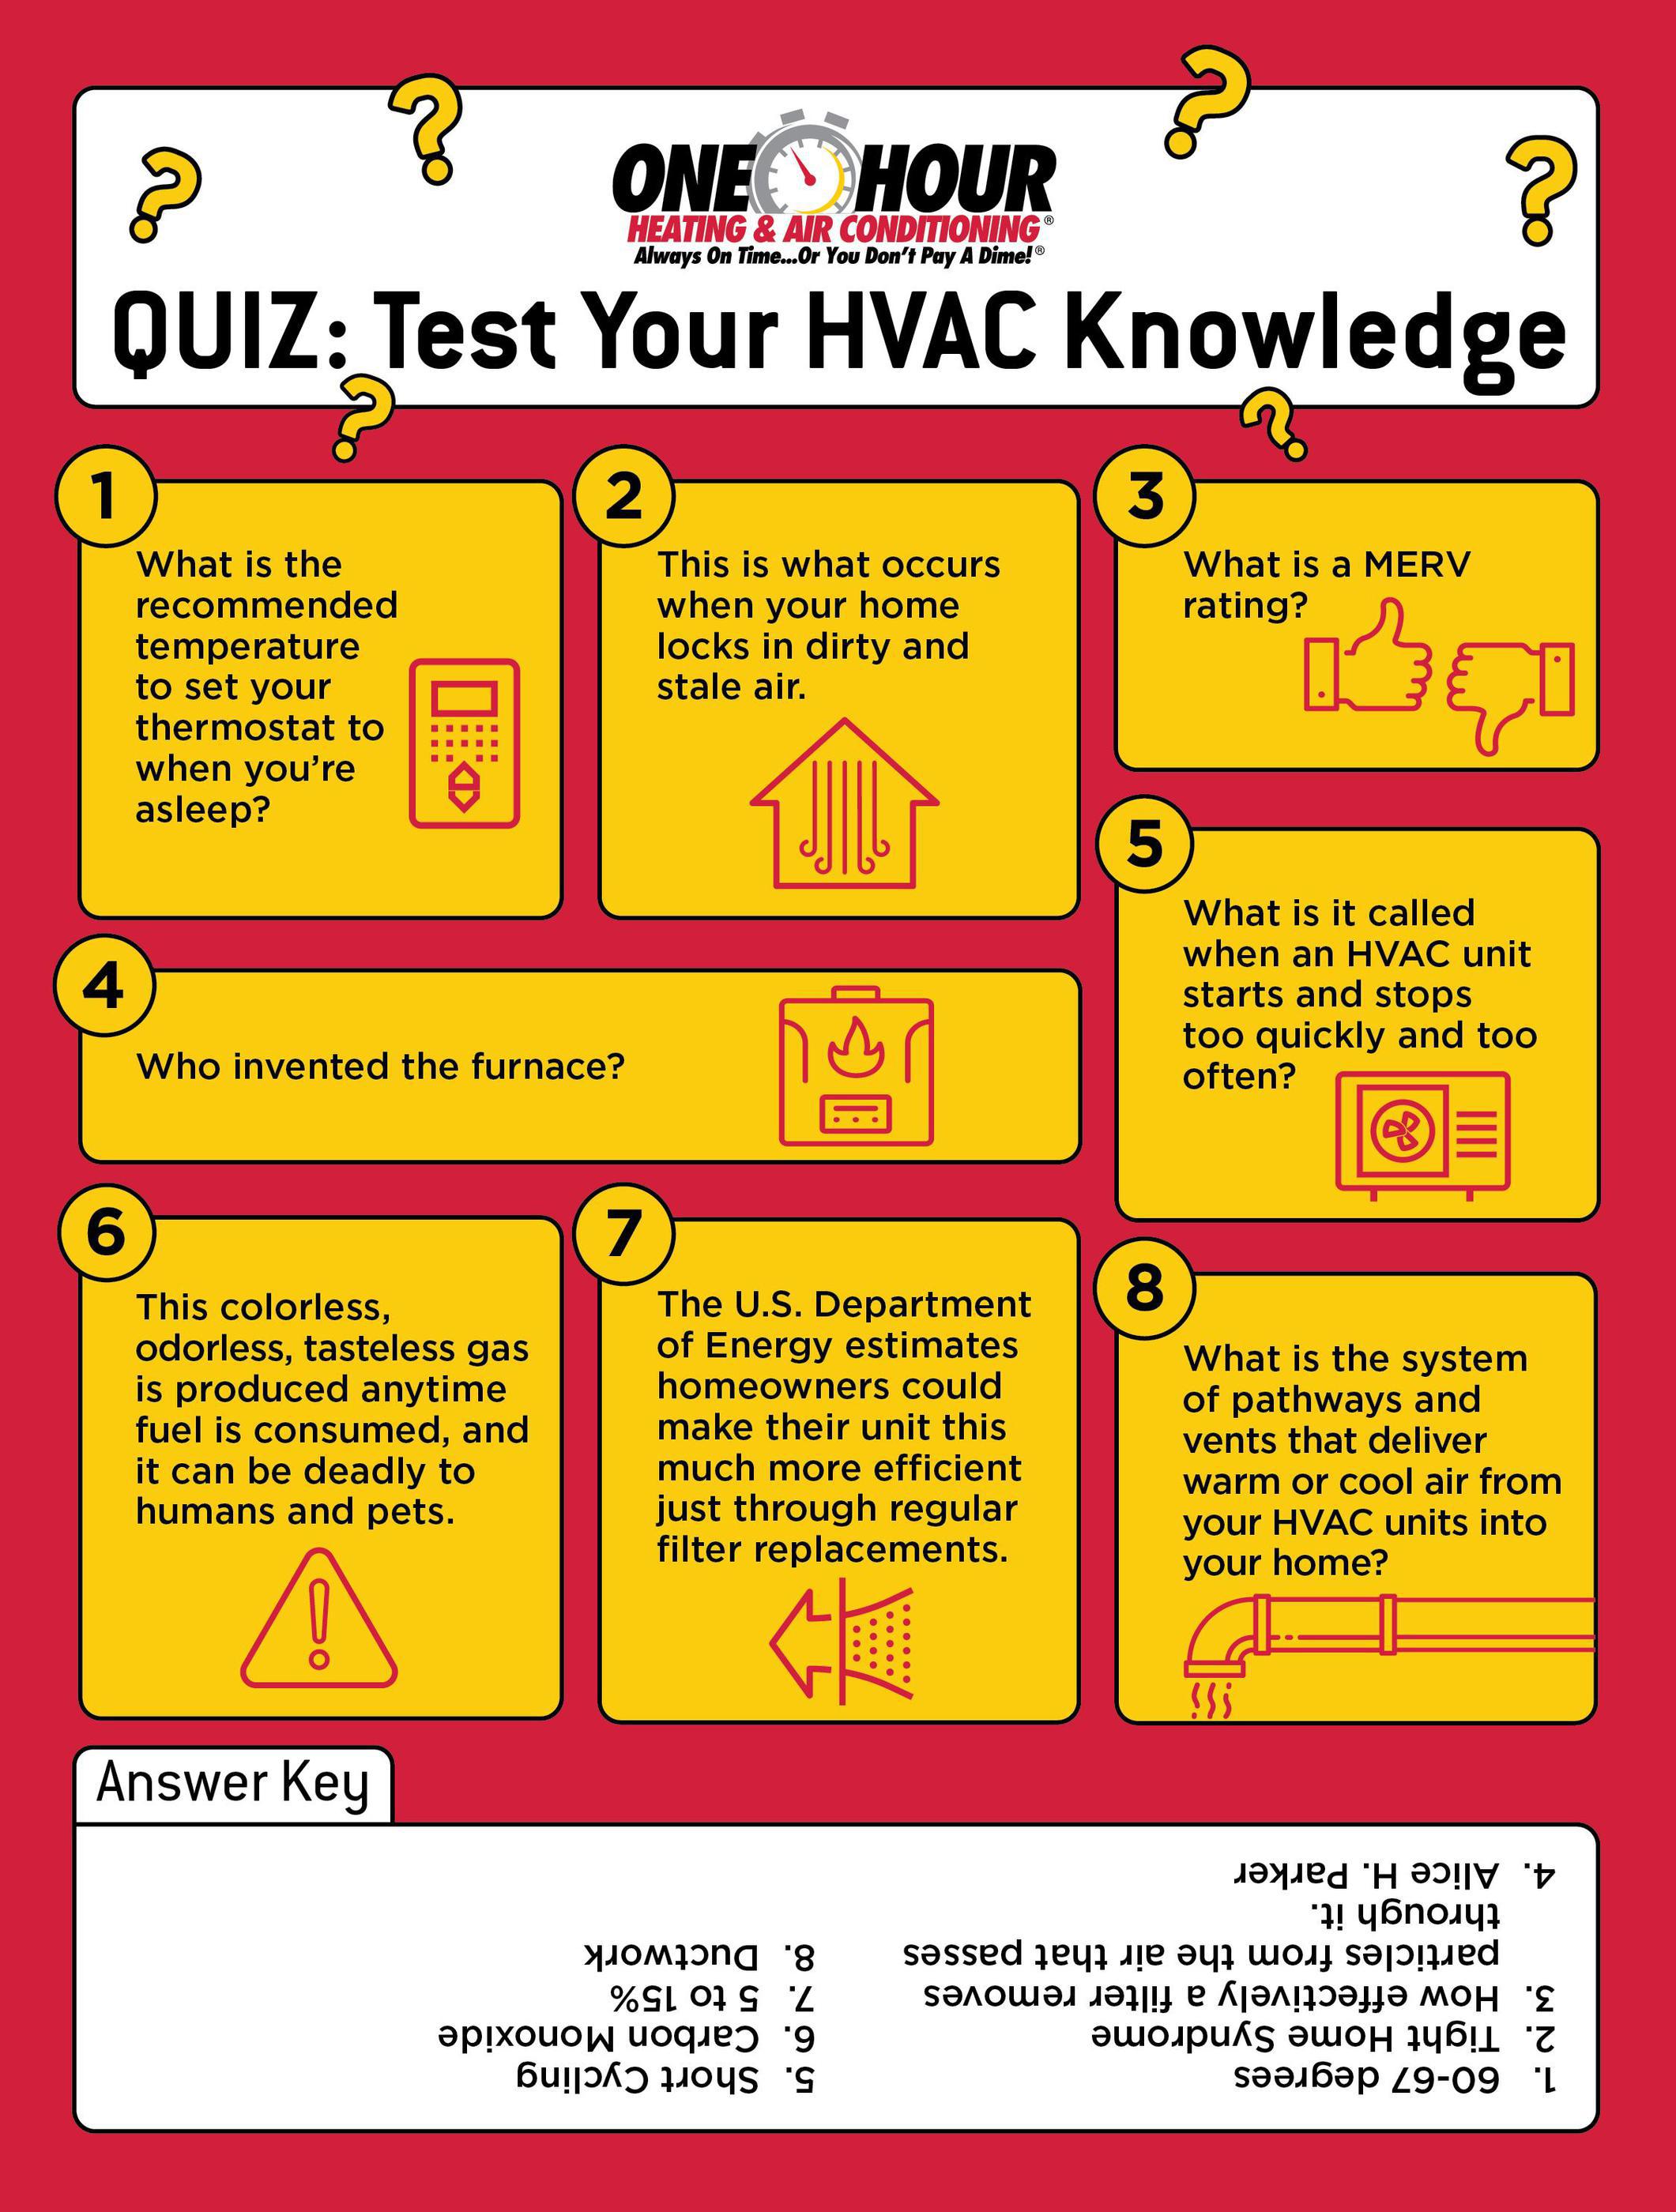 QUIZ: Test Your HVAC Knowledge